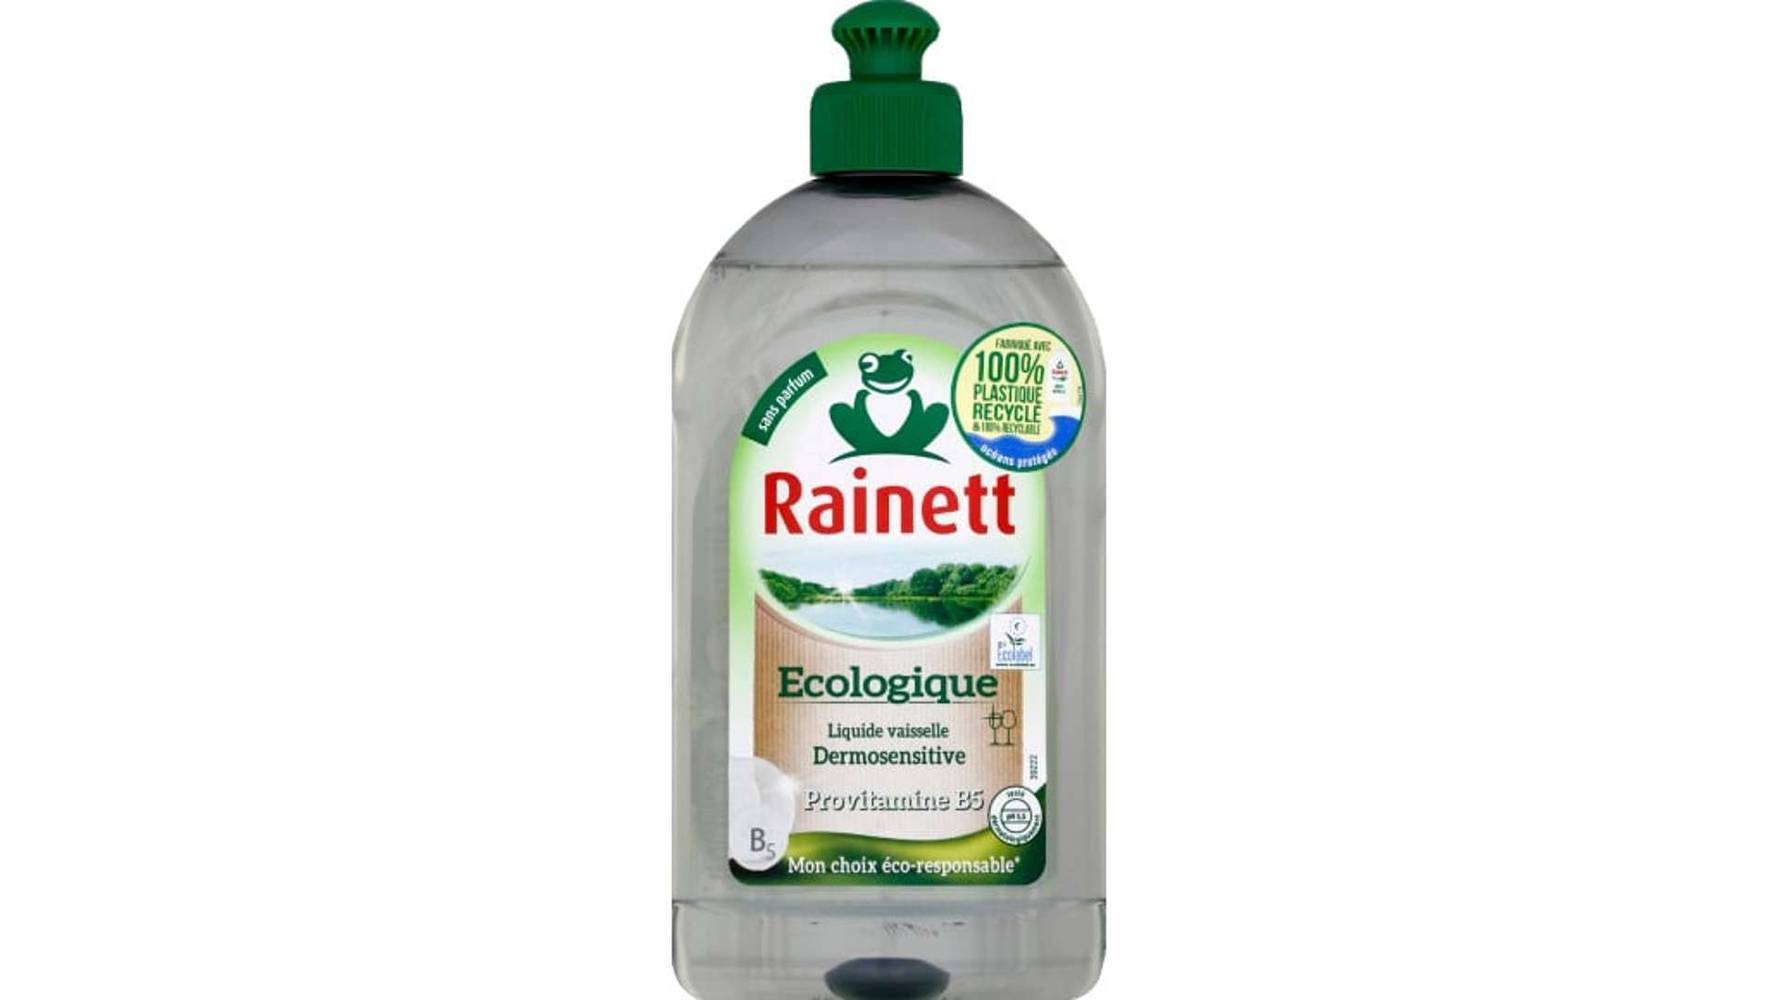 Rainett - Liquide vaisselle dermosensitive ecolabel (500 ml)